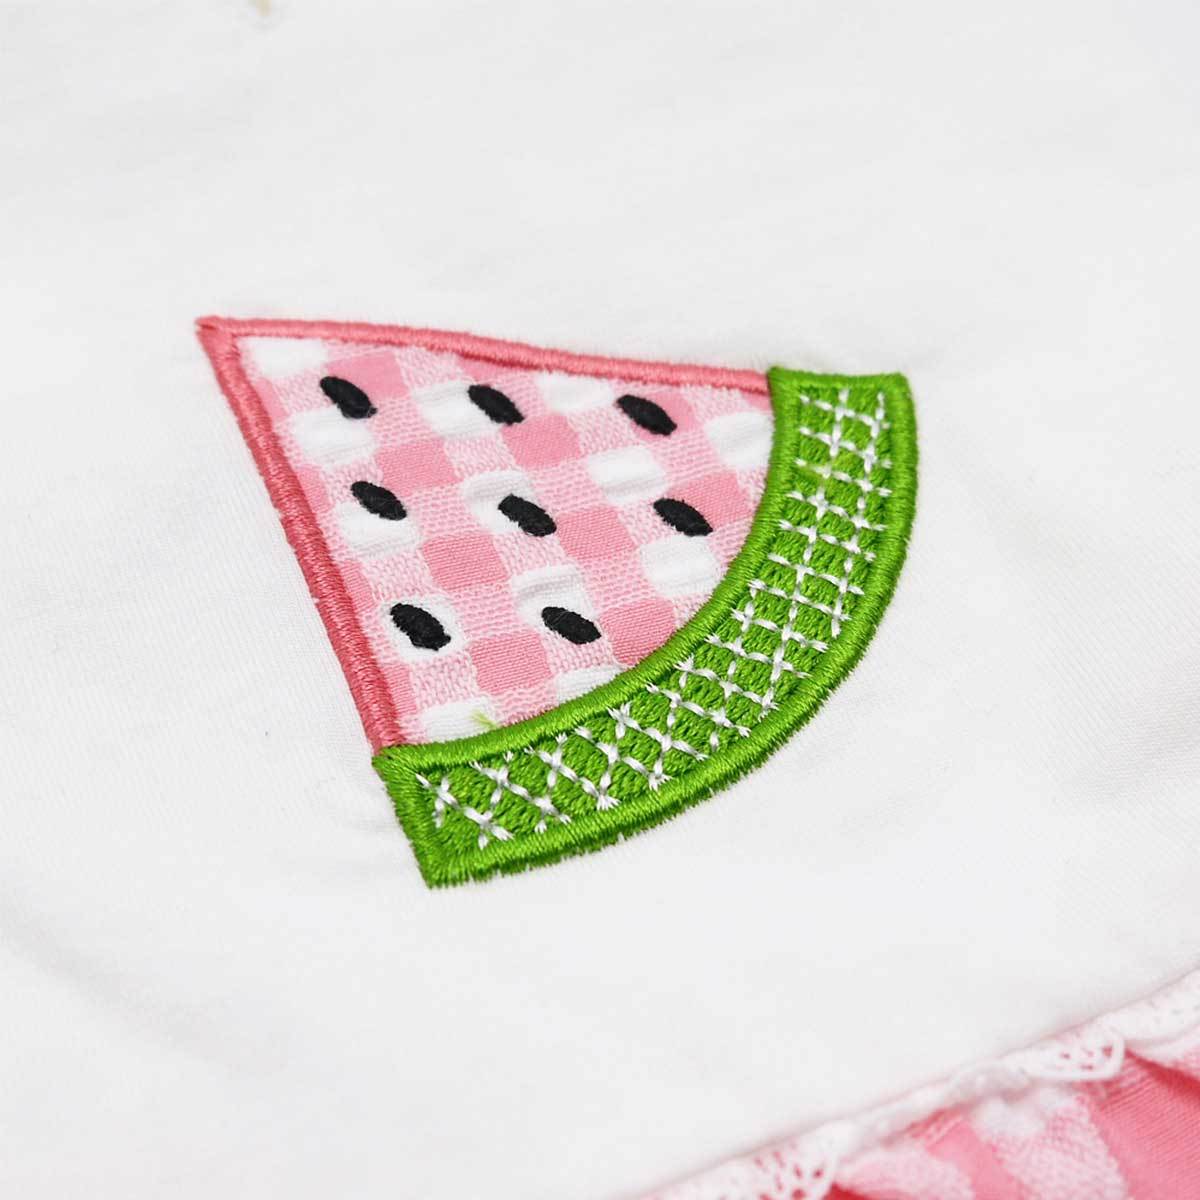 Watermelon Dog Dress | Pawlicious & Company